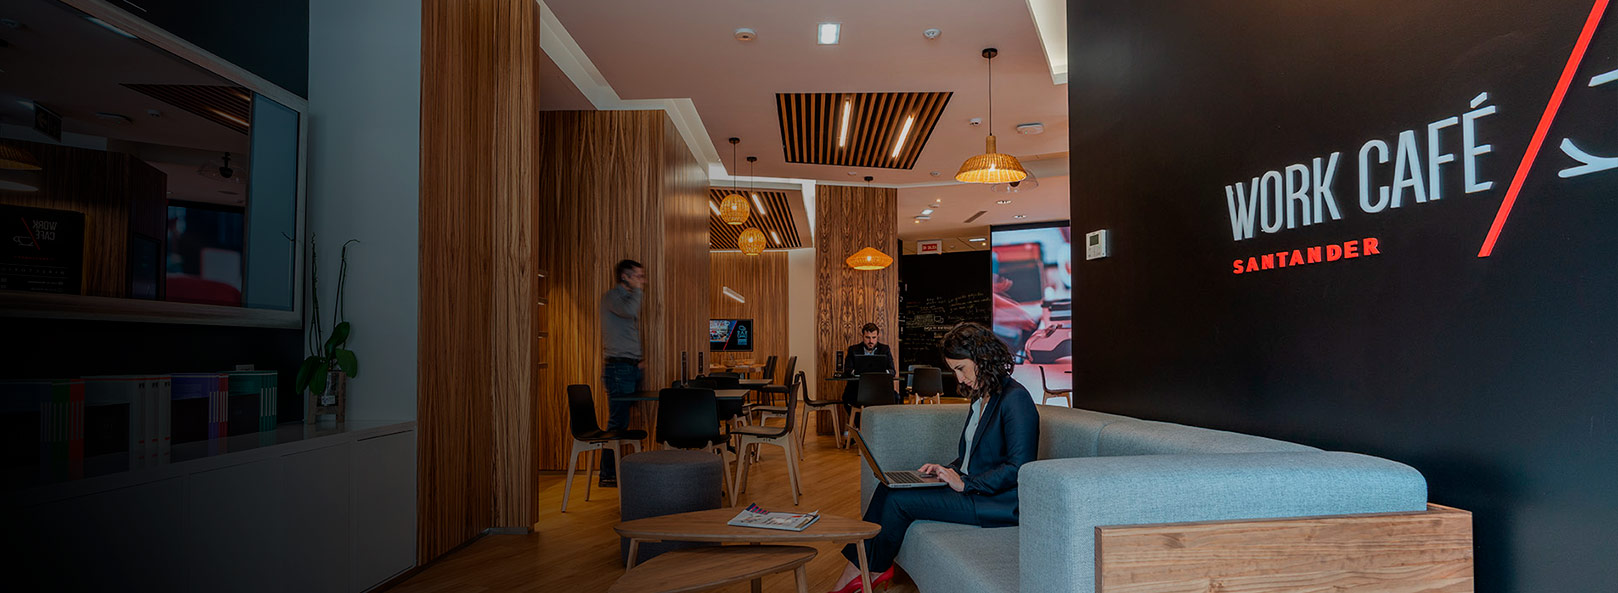 bc-work-cafe-santander-interior